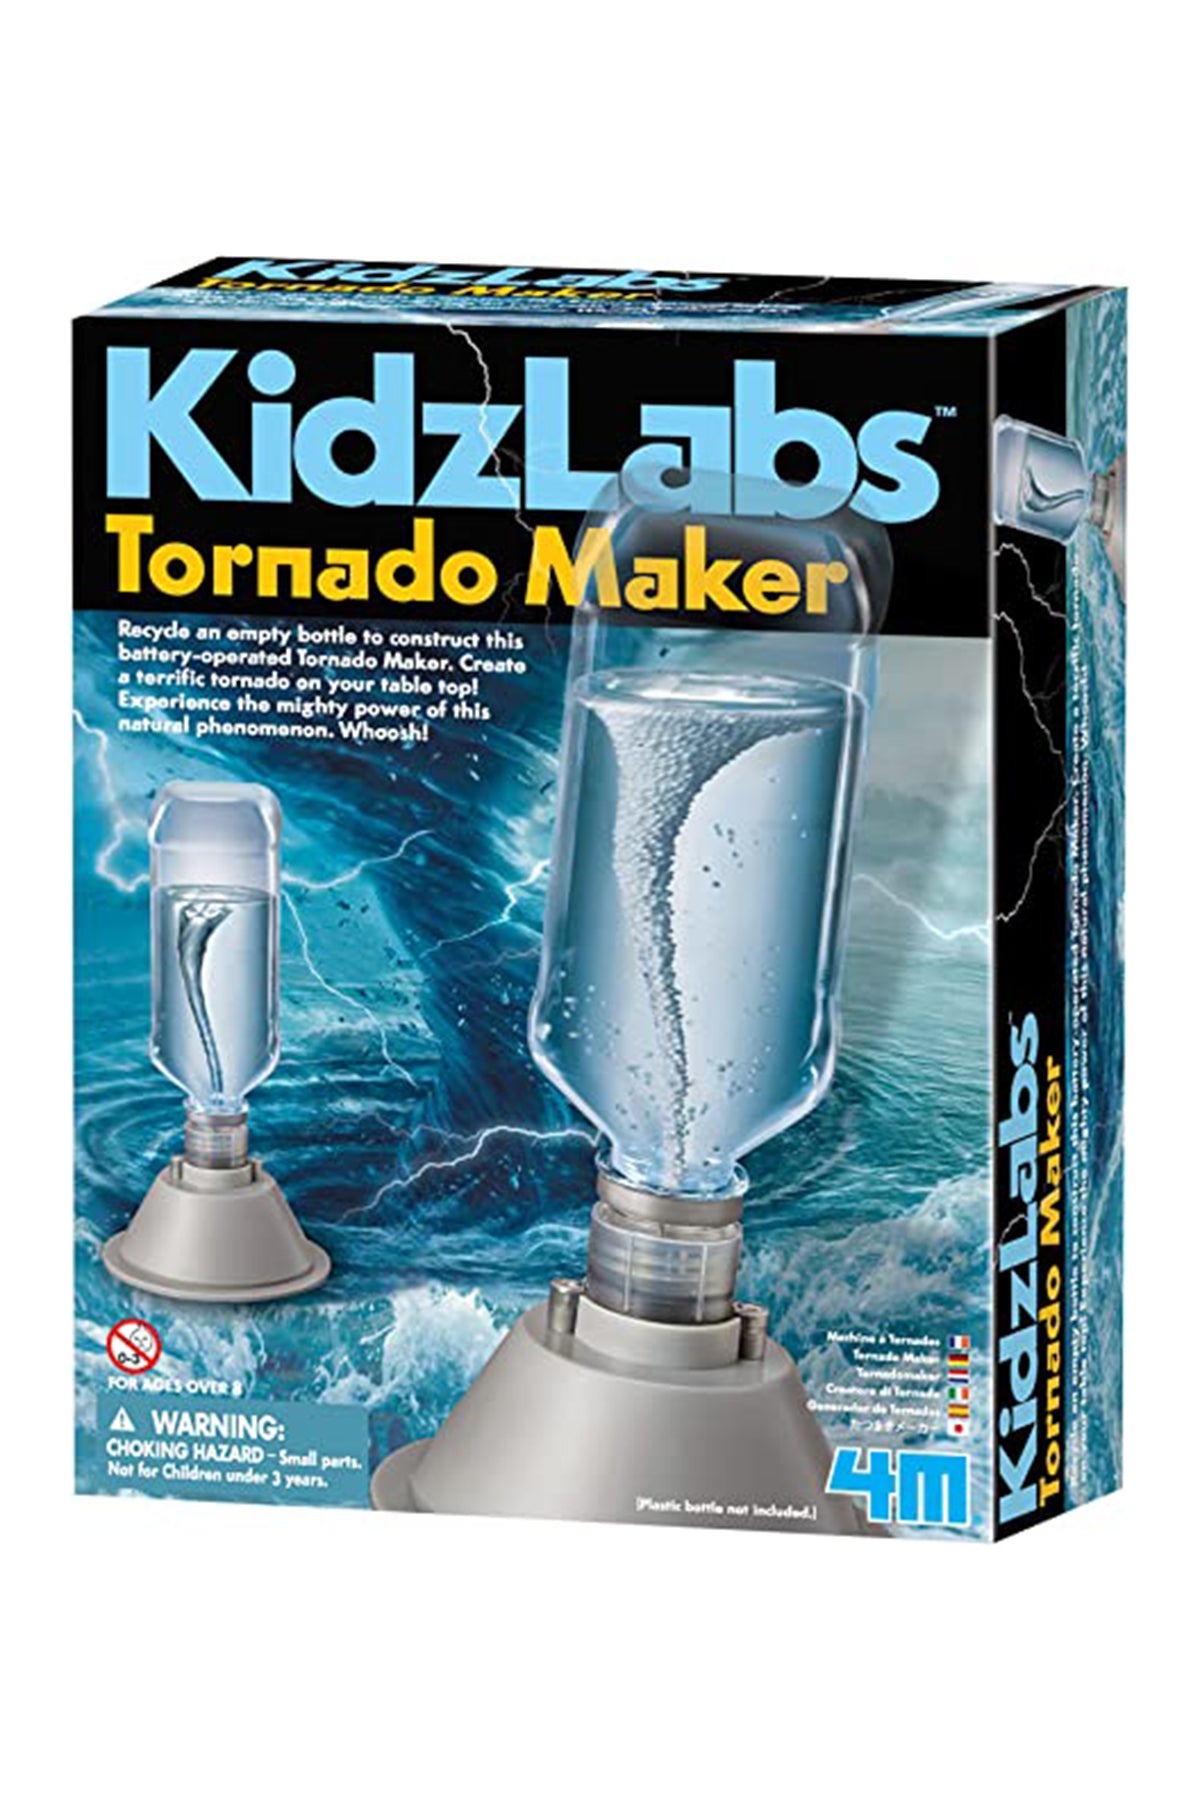 4M Kidzlabs - Tornado Maker